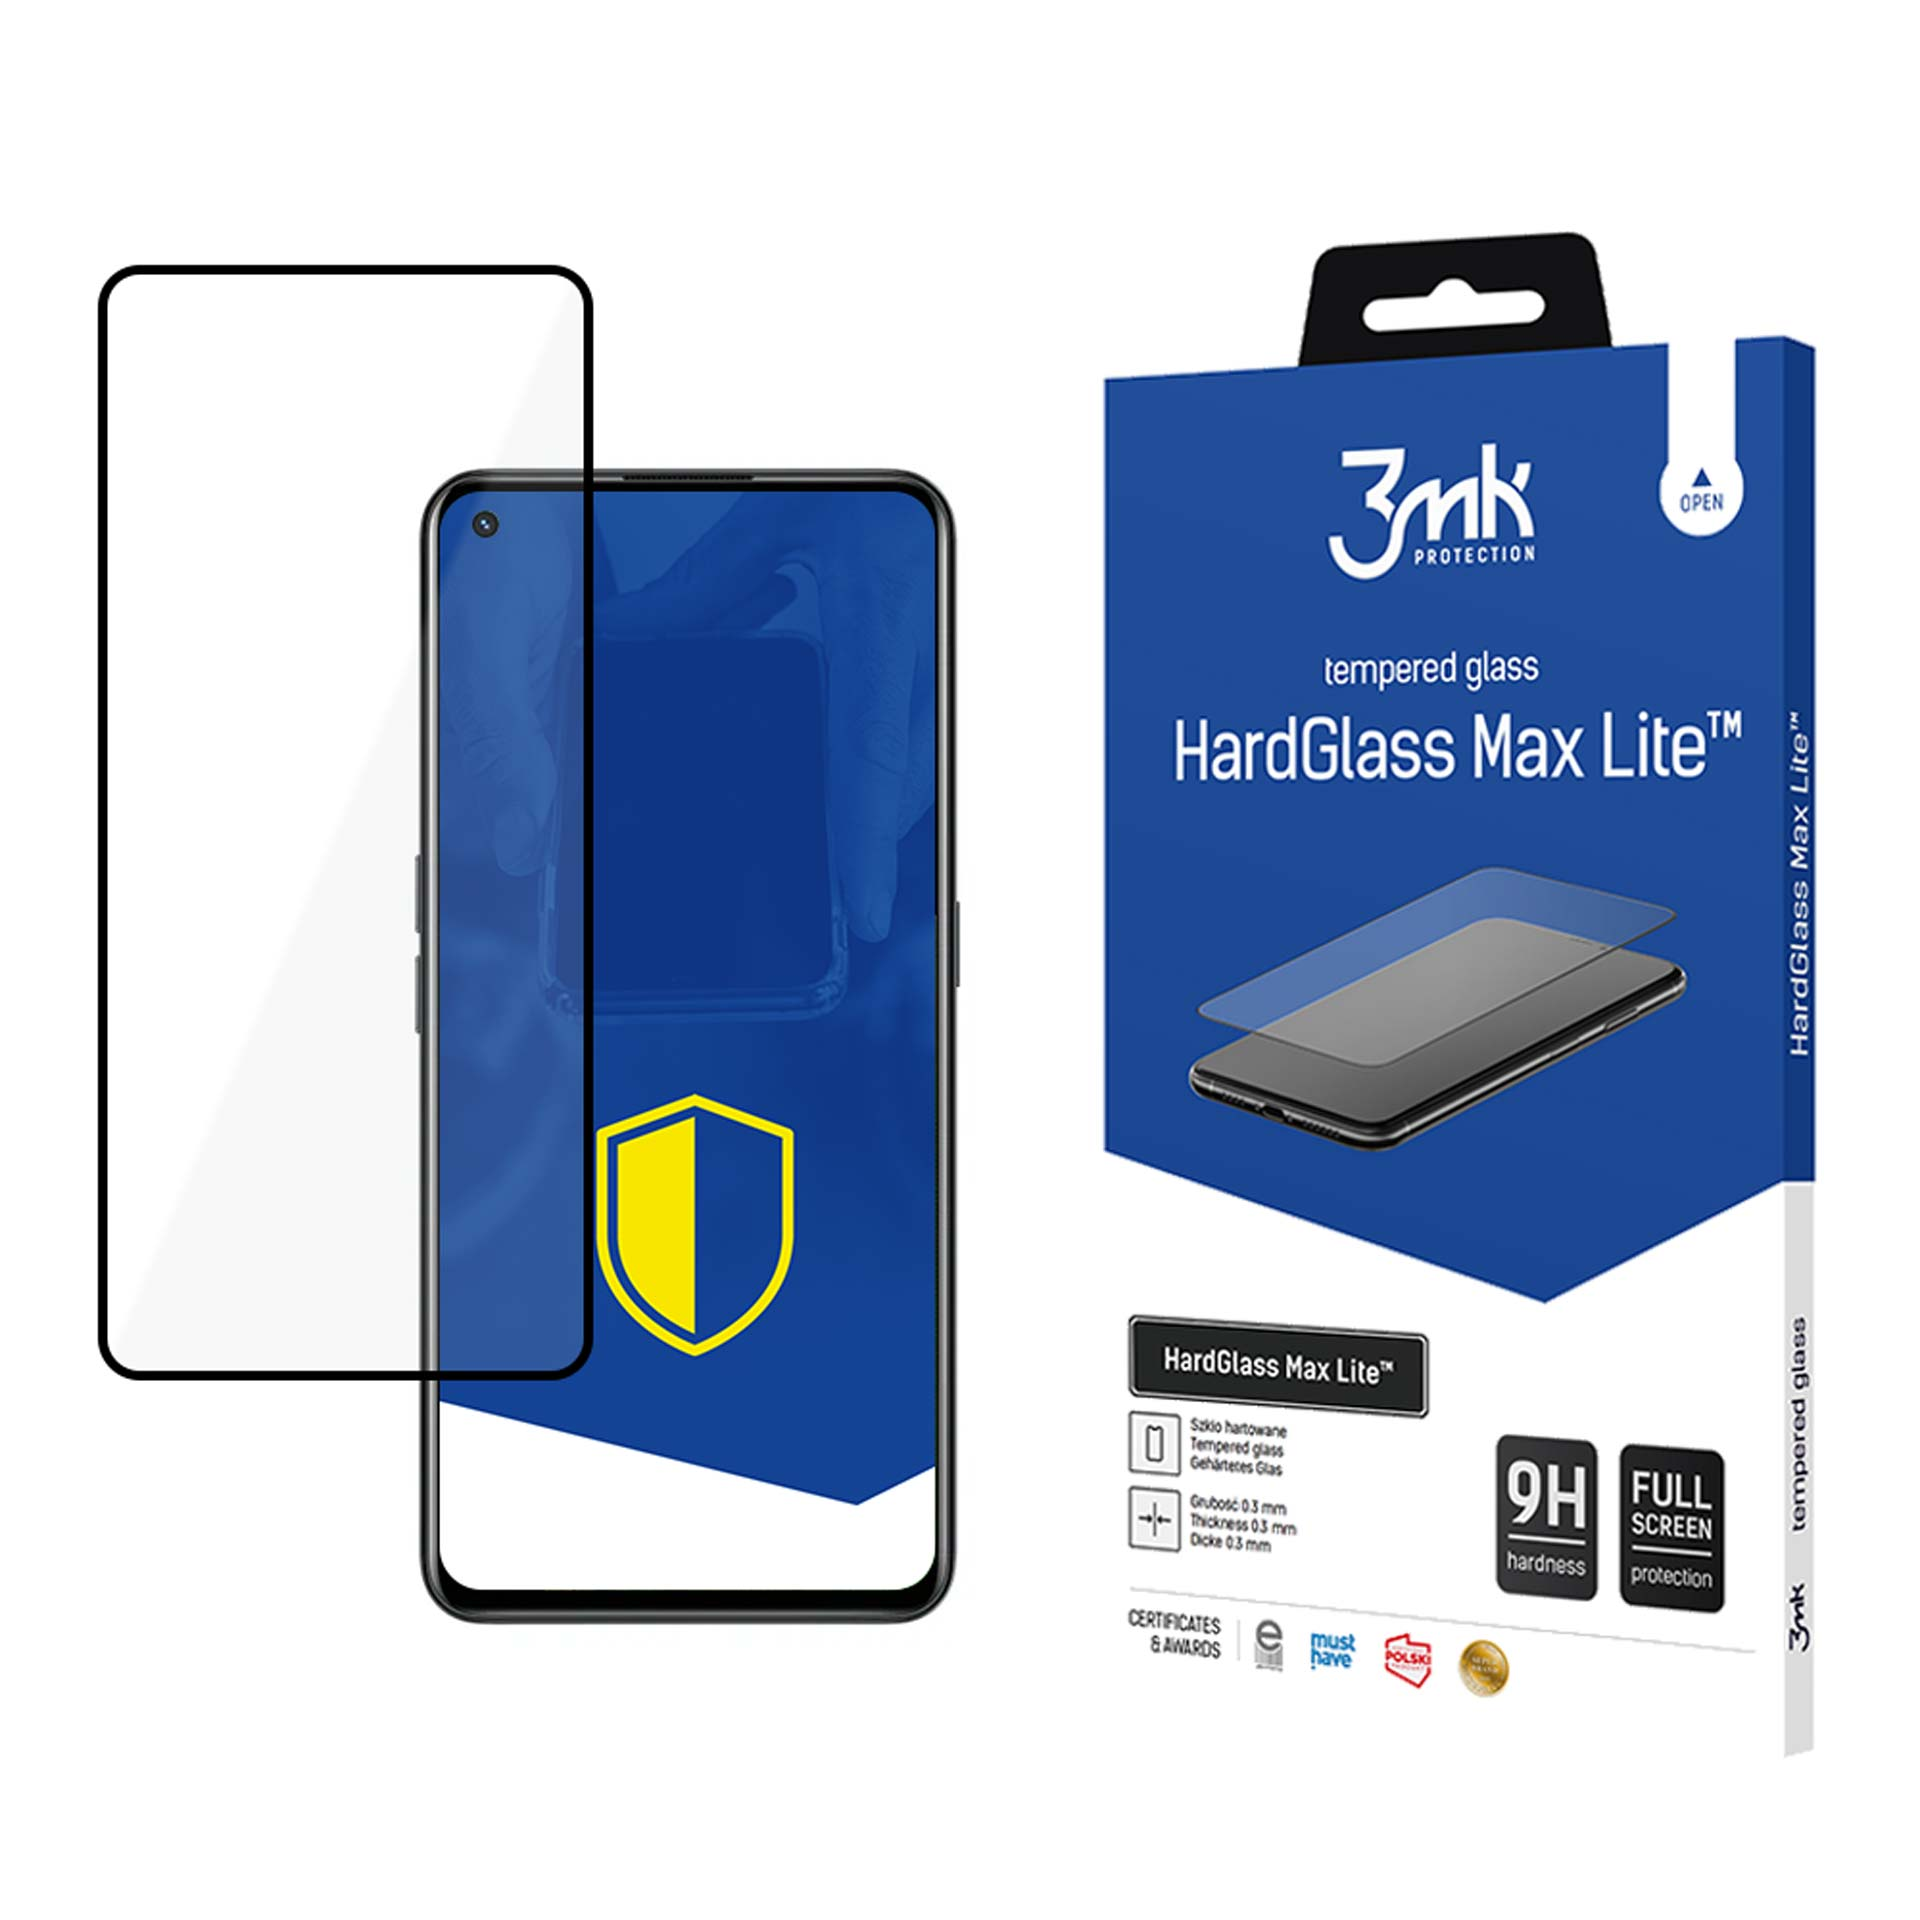 GT HardGlass 3mk 5G) Neo Glas(für Lite Realme 2 2 - Realme 3MK Neo 5G Realme Max GT